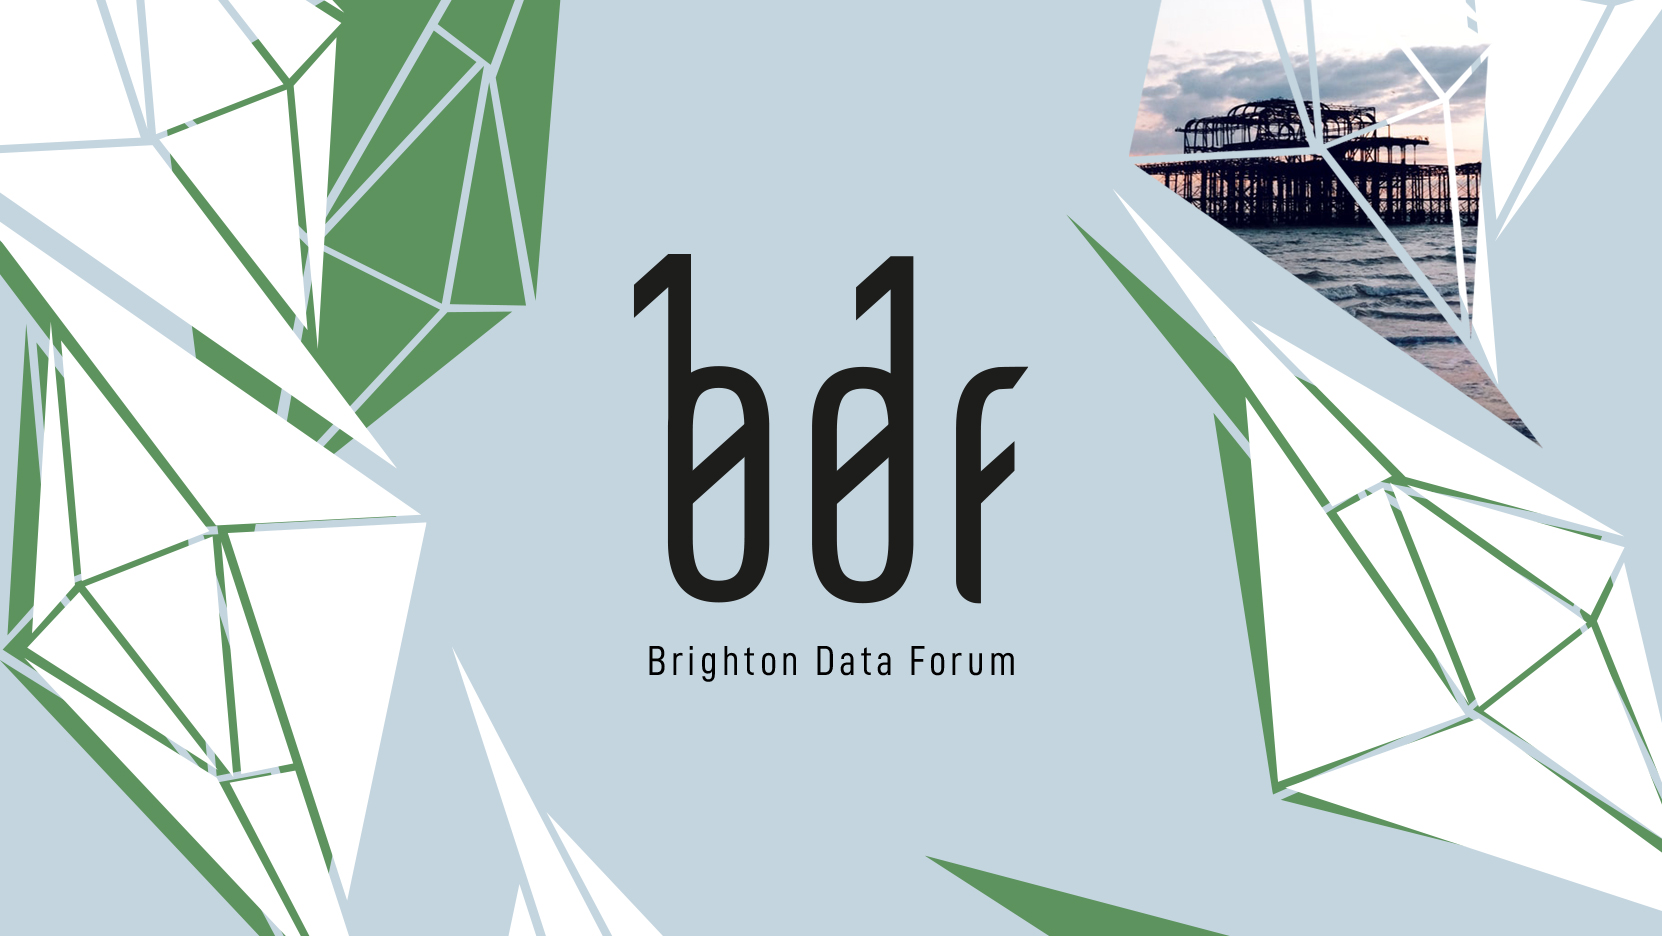 Brighton Data Forum: Special event on AI